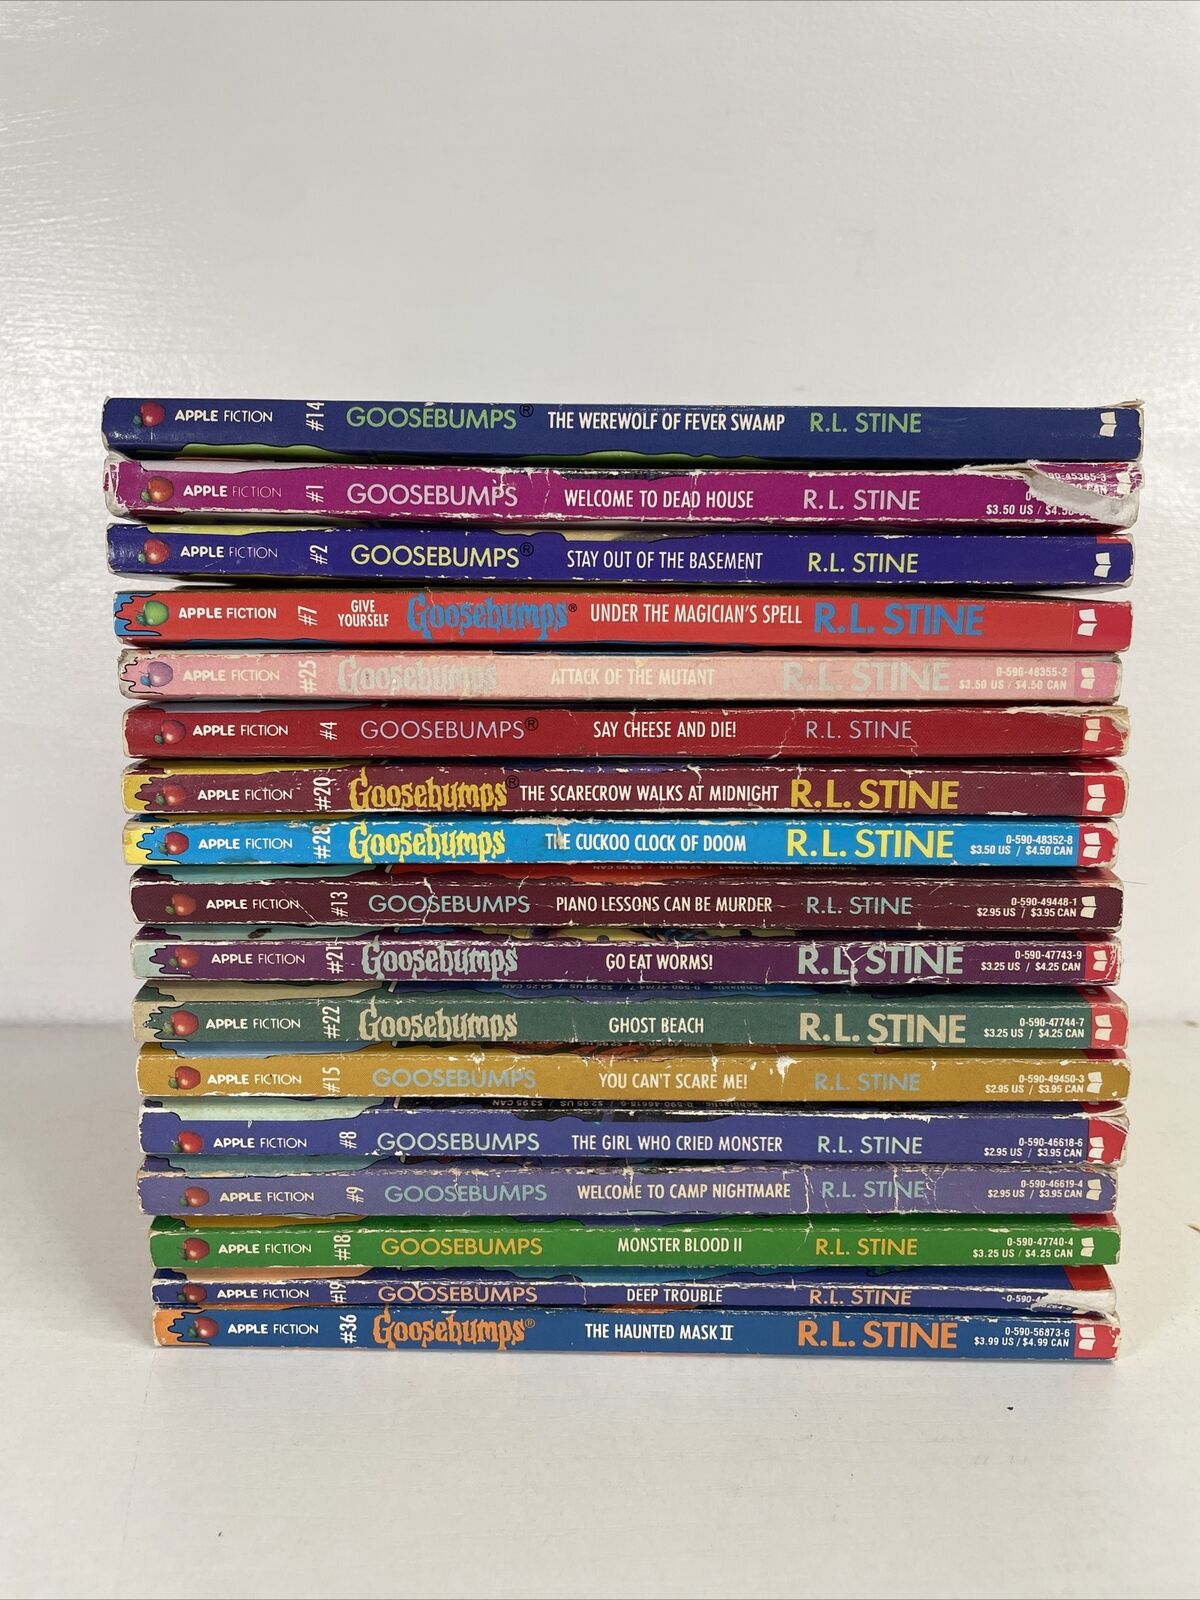 VTG 90s RL Stine Goosebumps Paperback Books Scholastic Apple Fiction Lot of 17